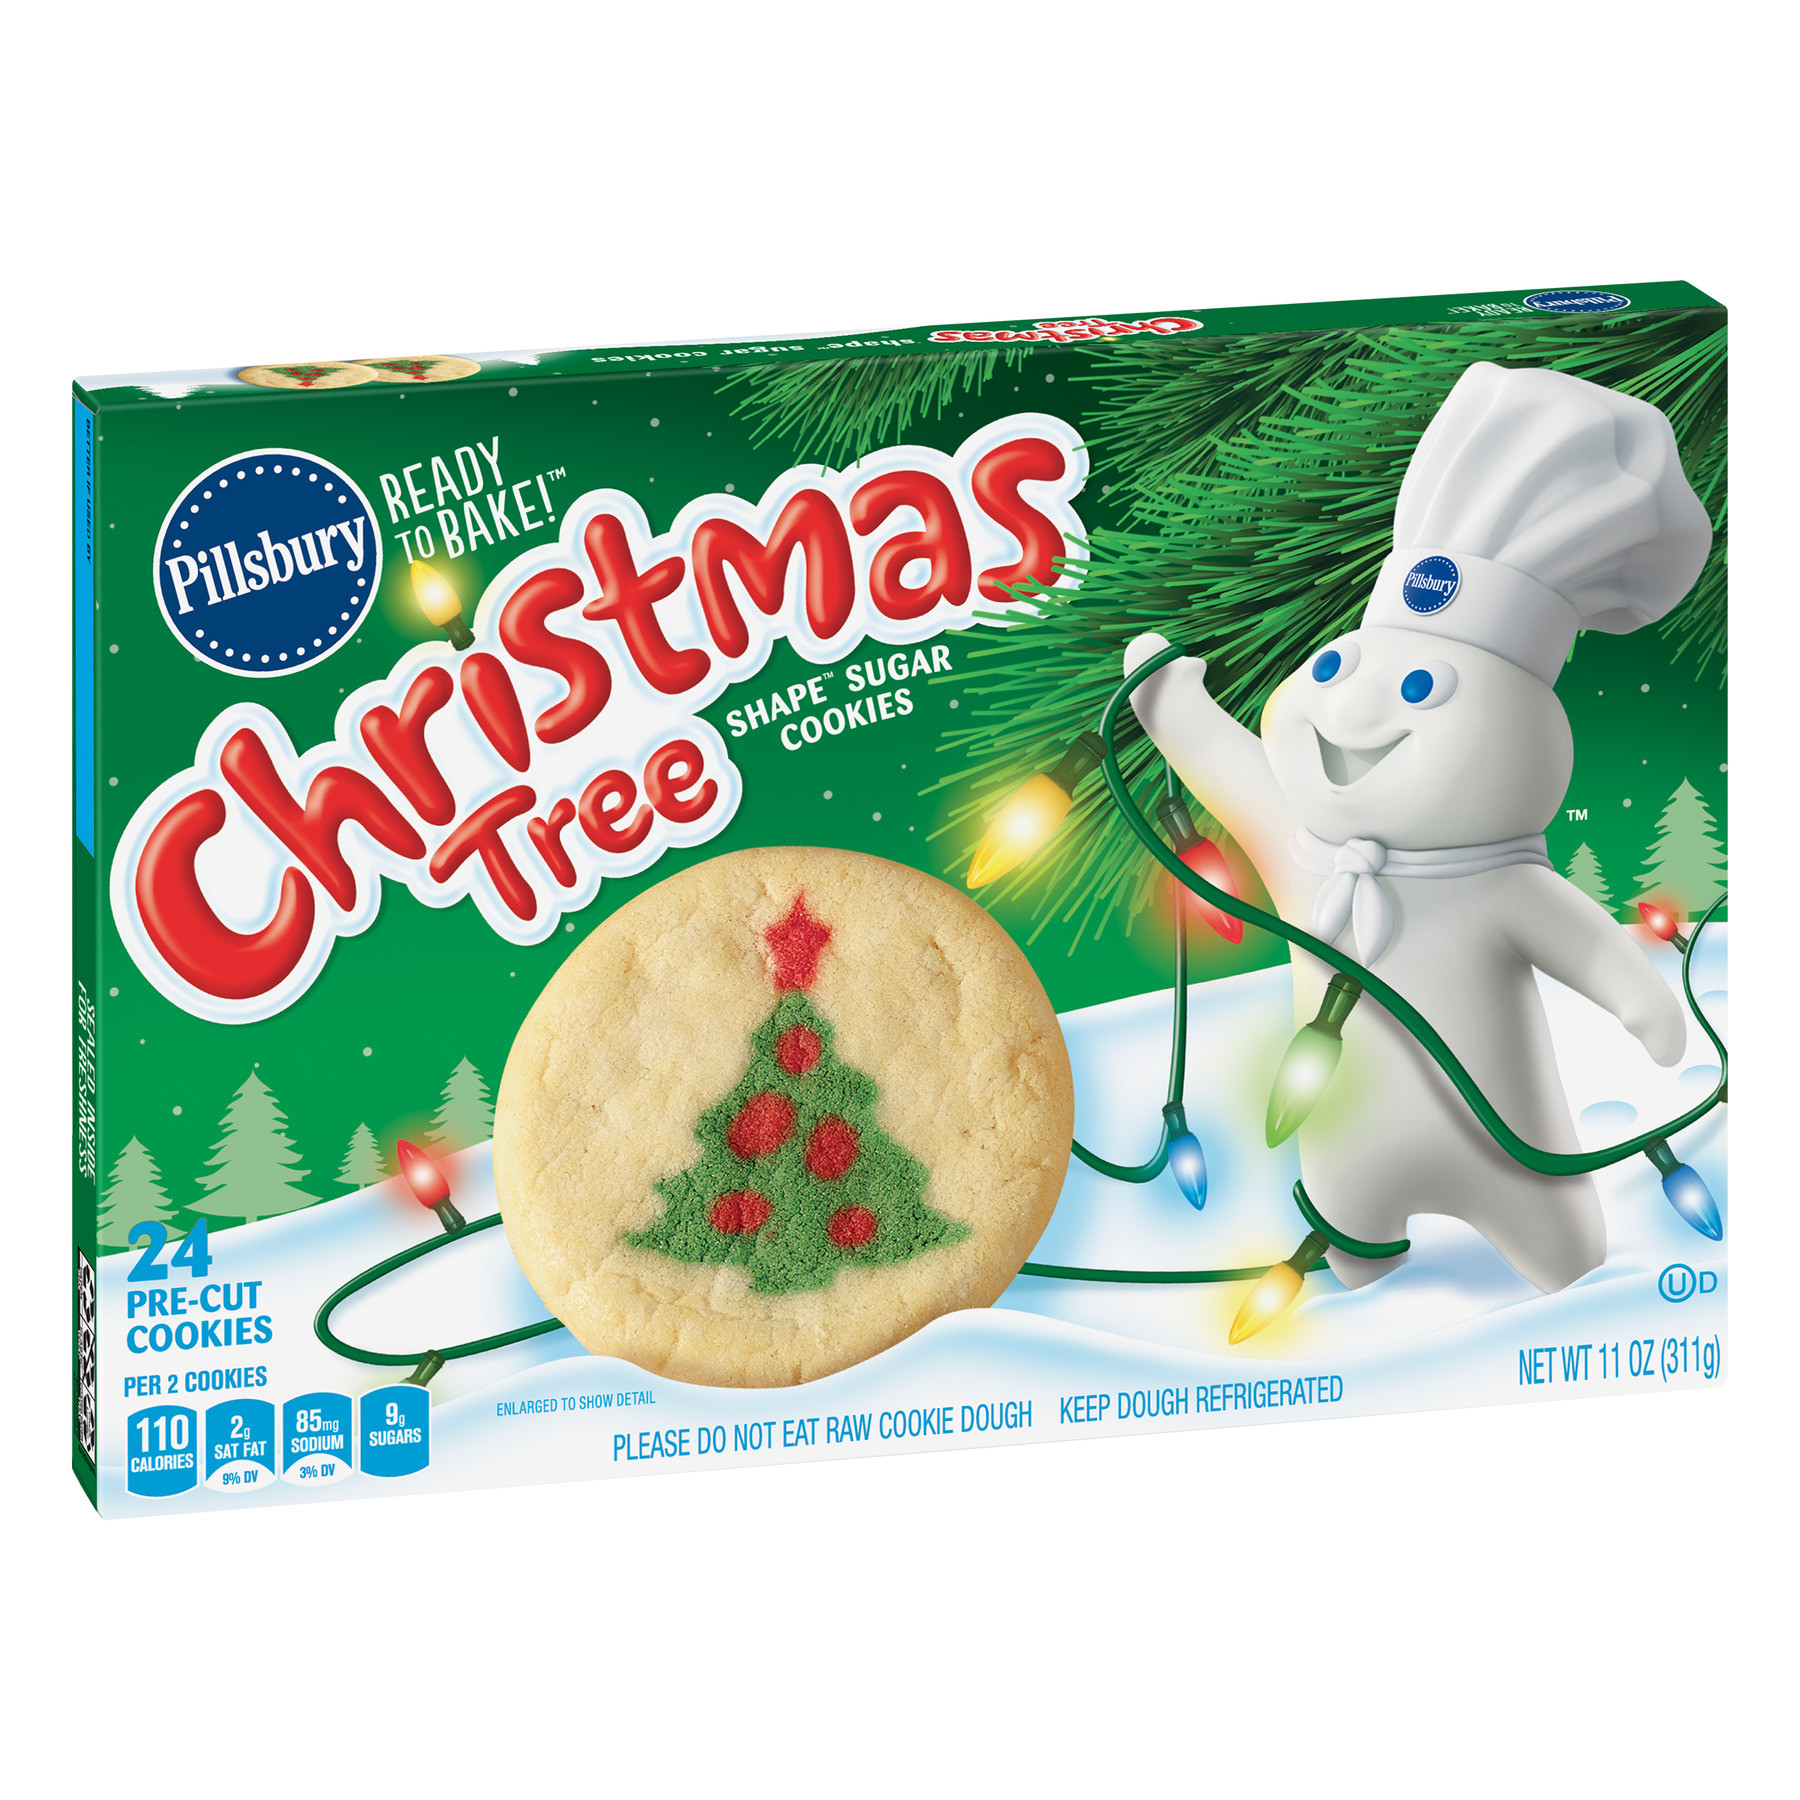 Christmas Cookies Pillsbury
 Pillsbury Ready to Bake Christmas Tree Shape Sugar